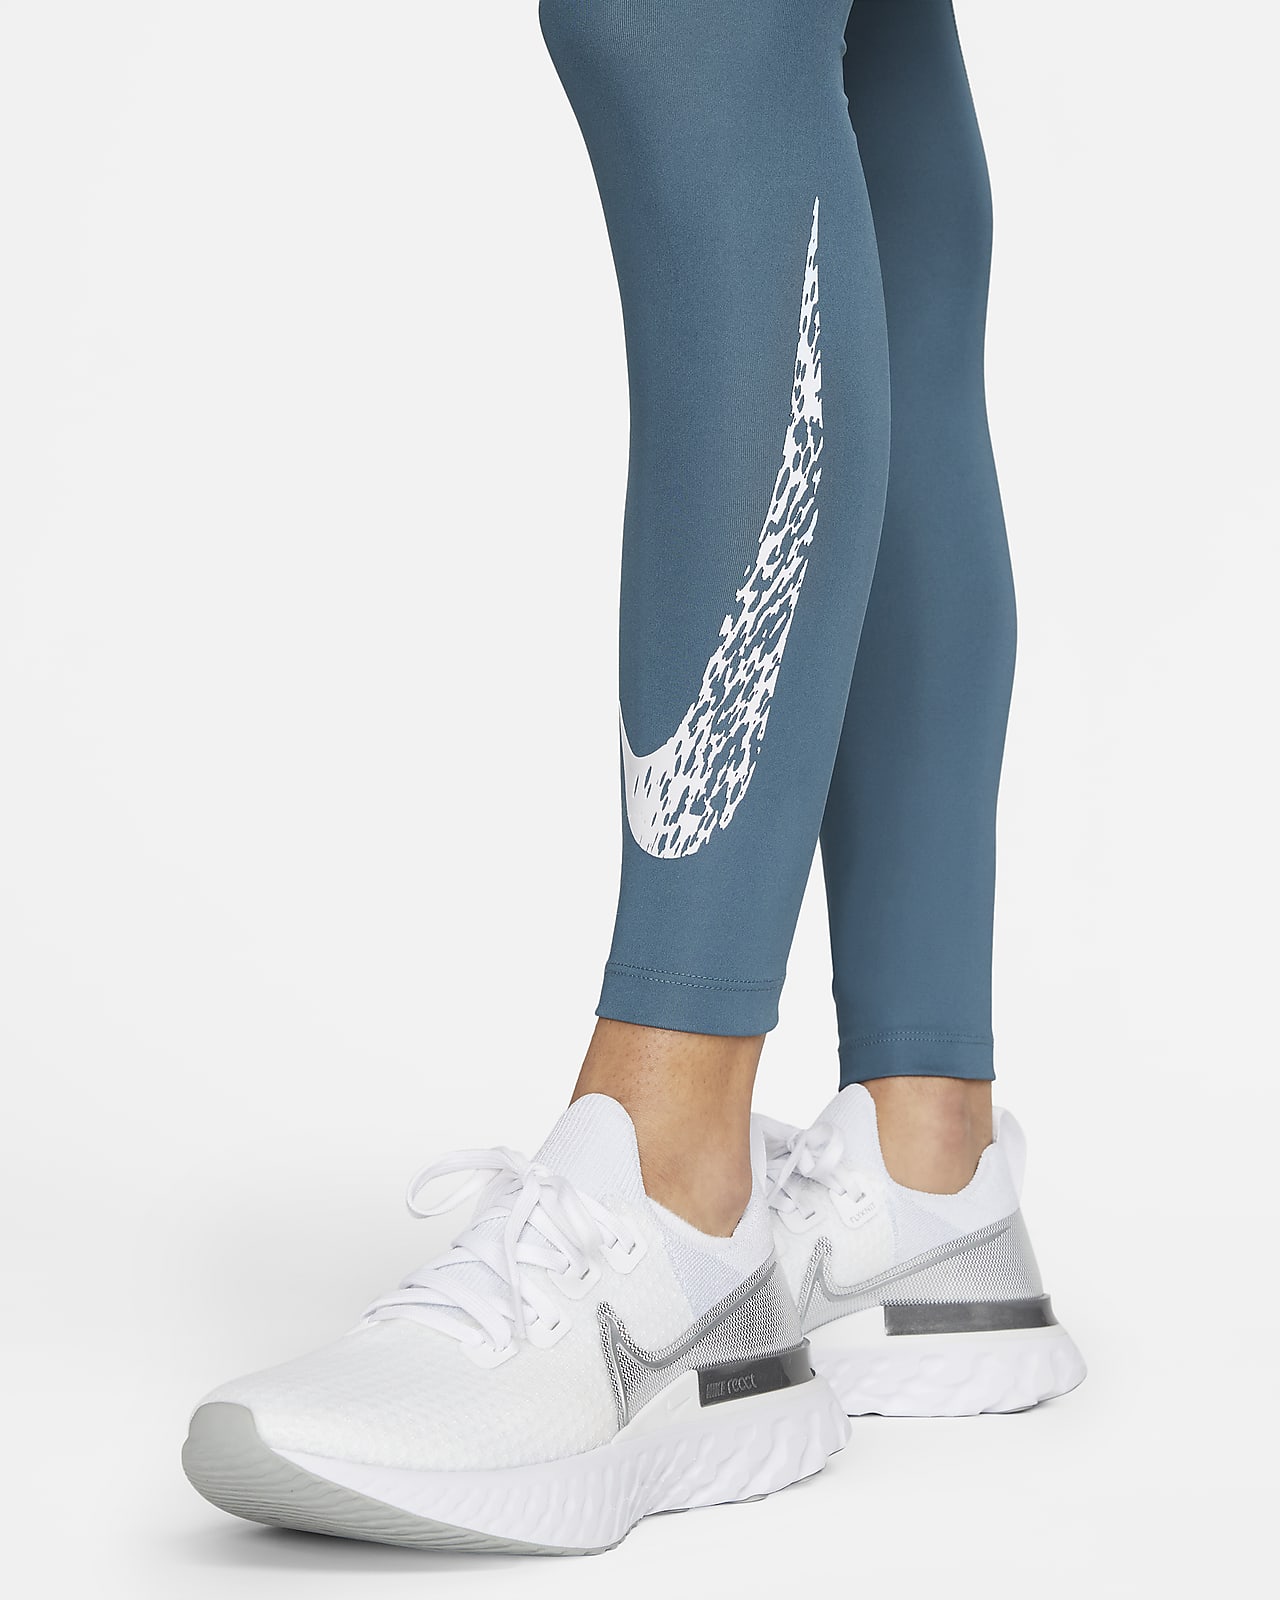 Nike Dri-Fit Swoosh Run Women's Mid-Rise 7/8 Running Leggings